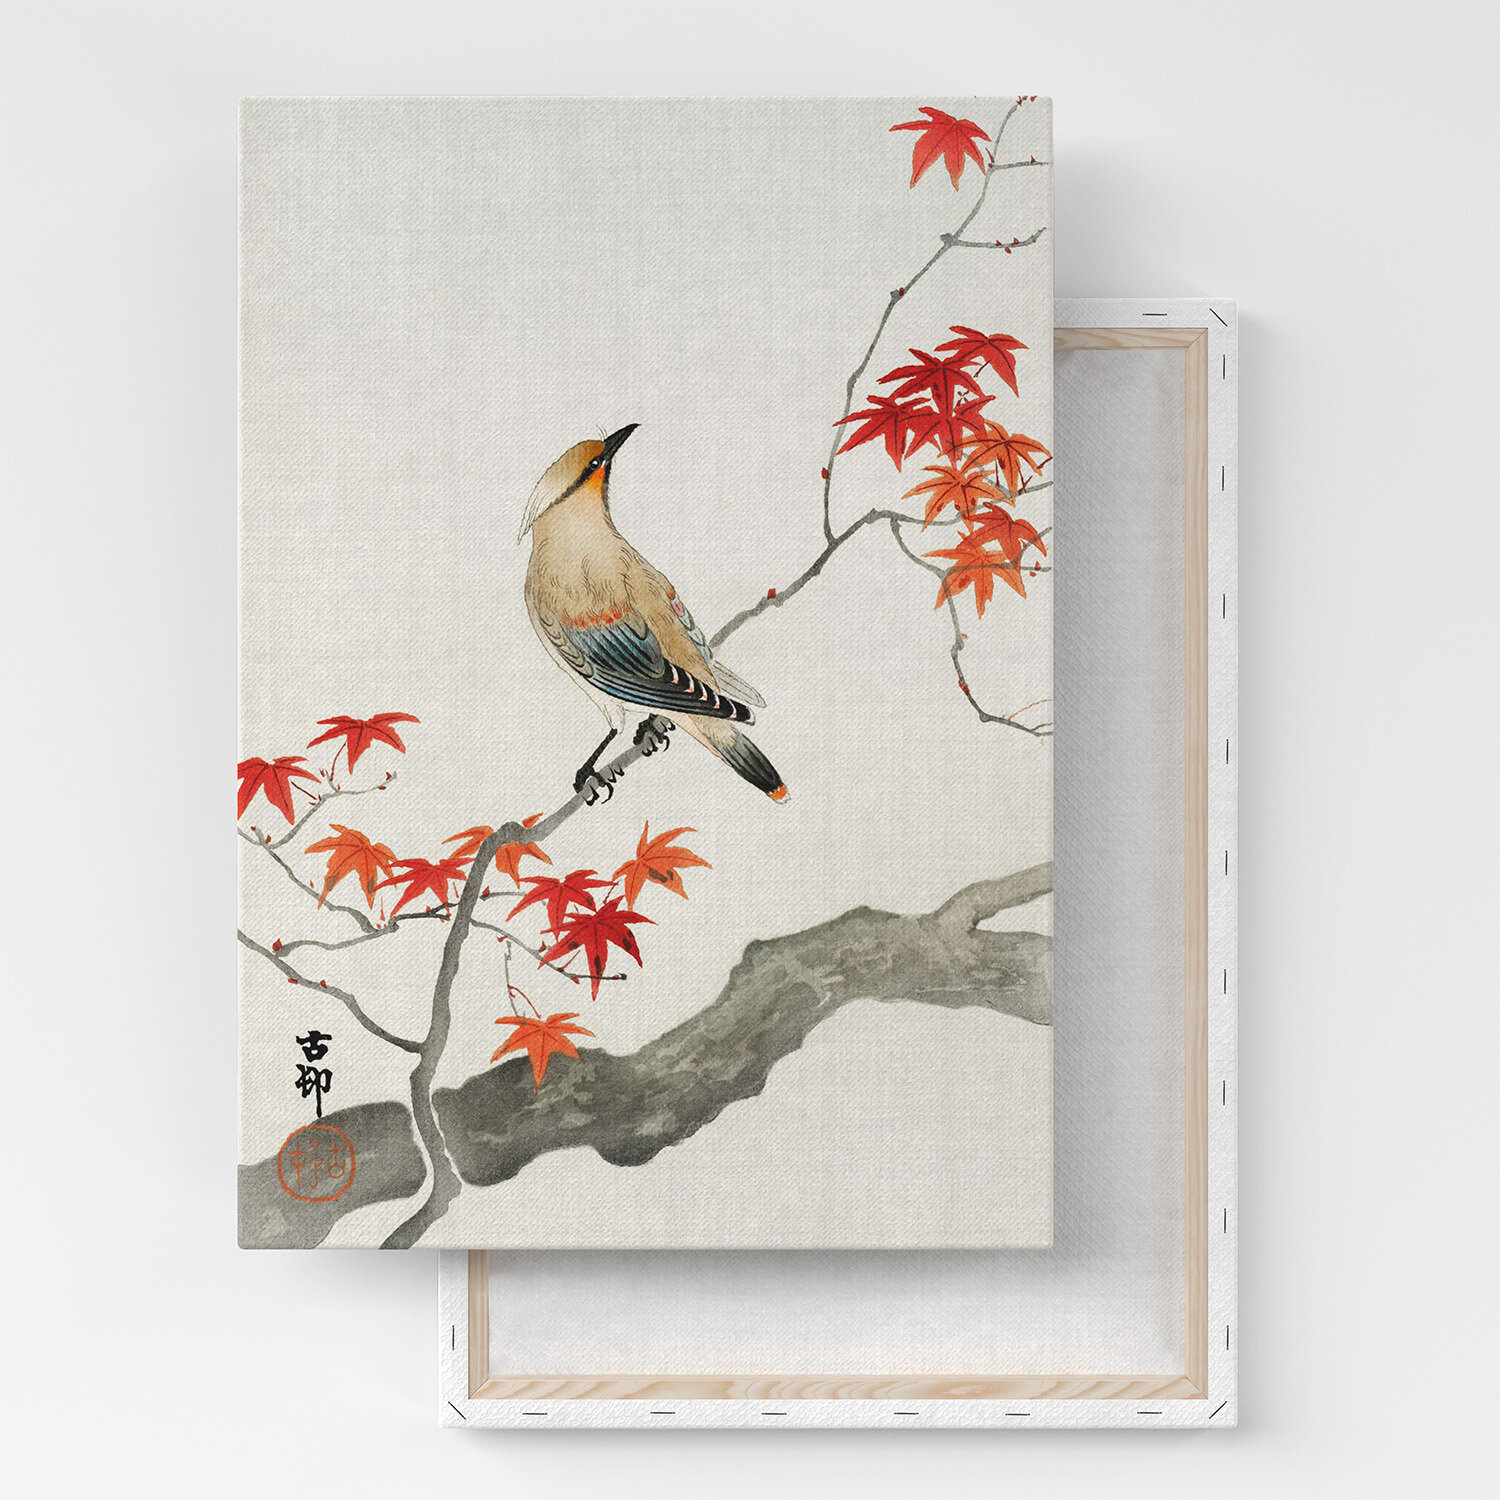 Картина на холсте, репродукция / Косон Охара - Japanese plague bird on maple / Размер 30 x 40 см